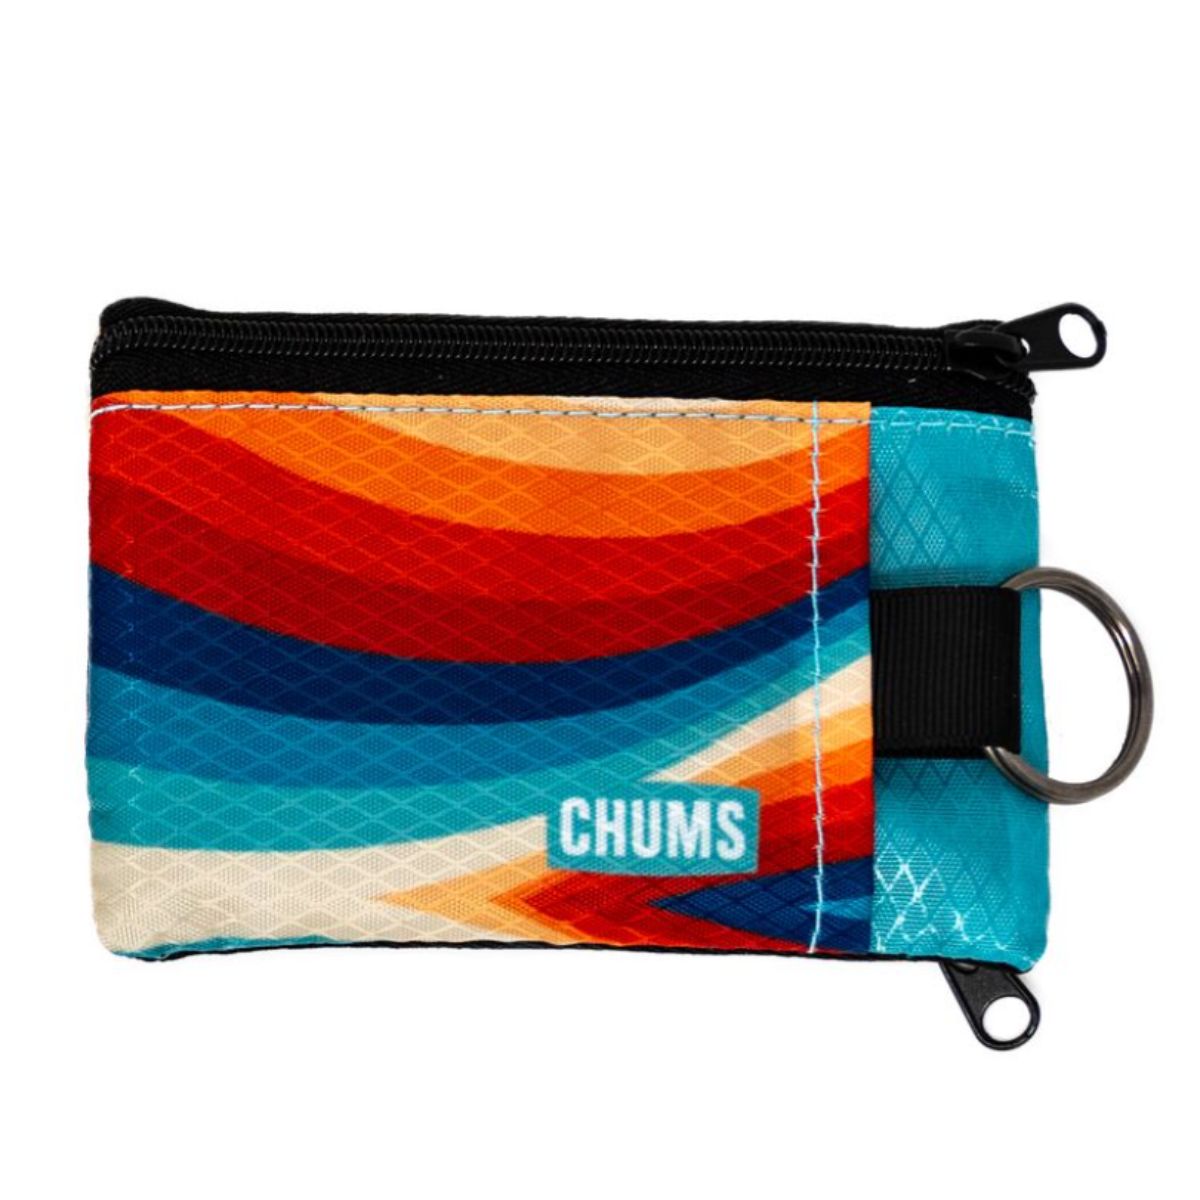 Chums, Surfshort Wallet, Unisex, Curves